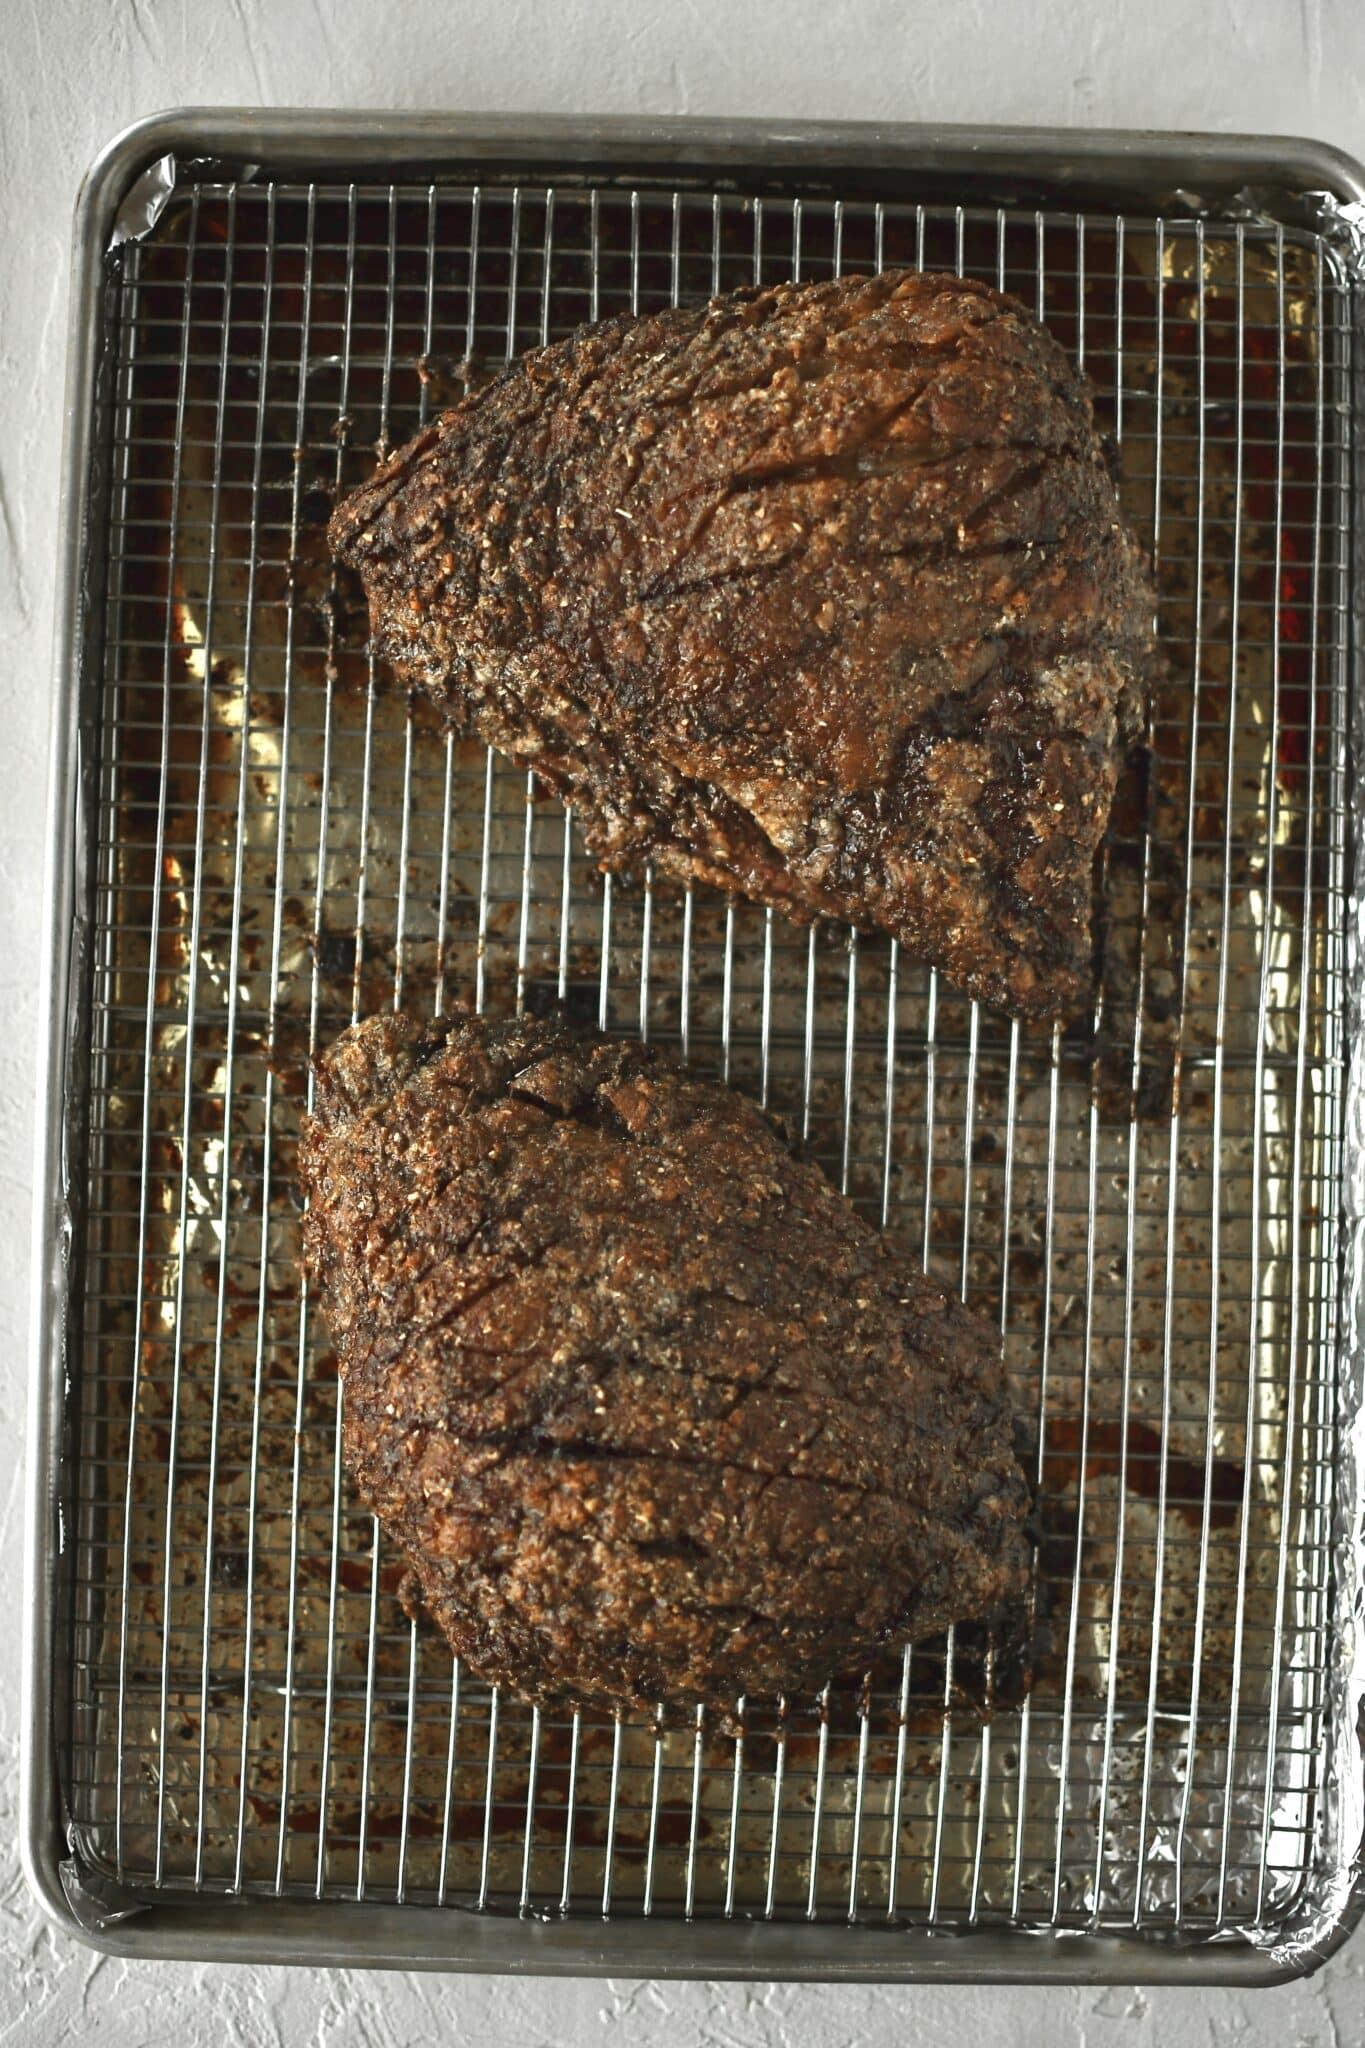 Seasoned beef after roasting.